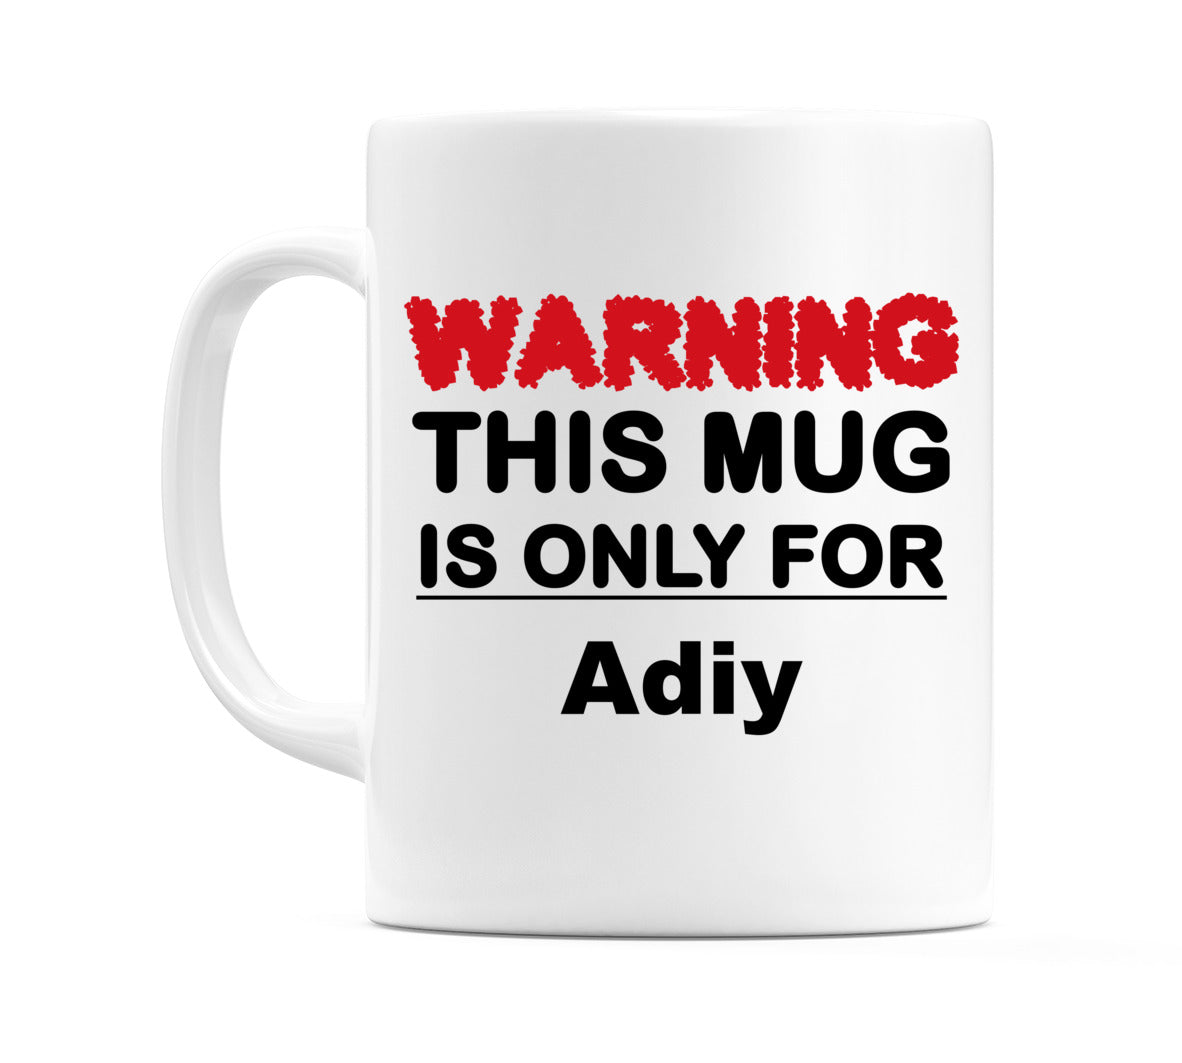 Warning This Mug is ONLY for Adiy Mug